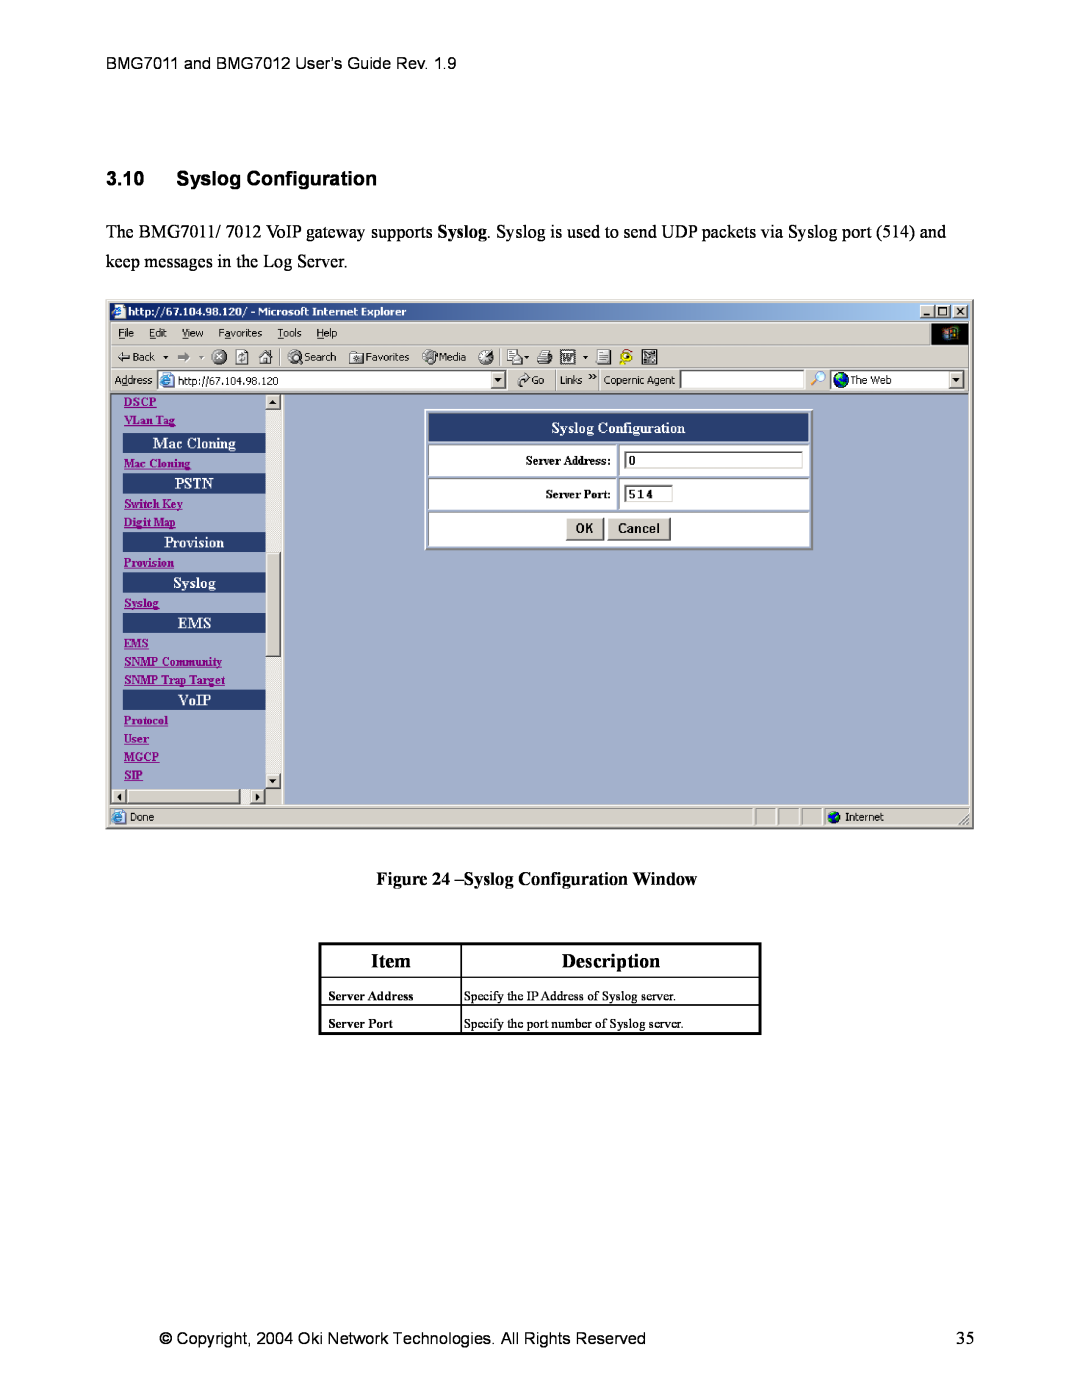 Oki BMG7011, BMG7012 manual 3.10Syslog Configuration, SyslogConfiguration Window, Item, Description 